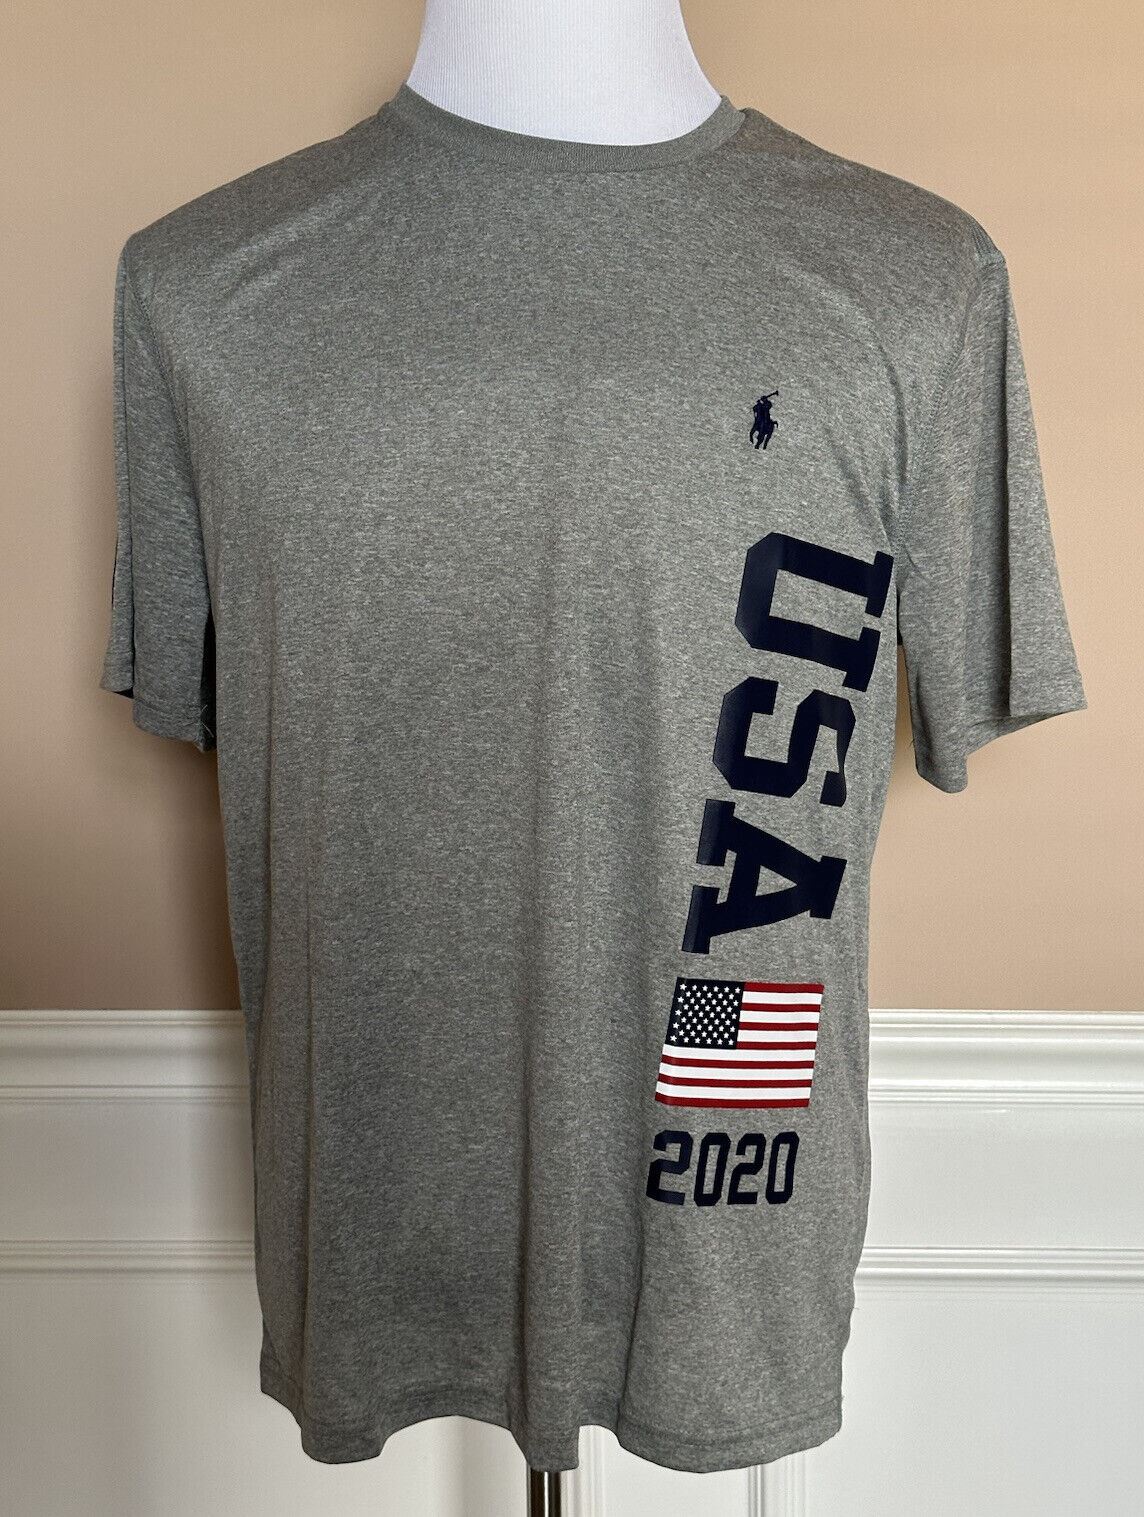 Neu mit Etikett: 59,50 $ Polo Ralph Lauren USA Team Kurzarm-Stretch-T-Shirt Grau L 